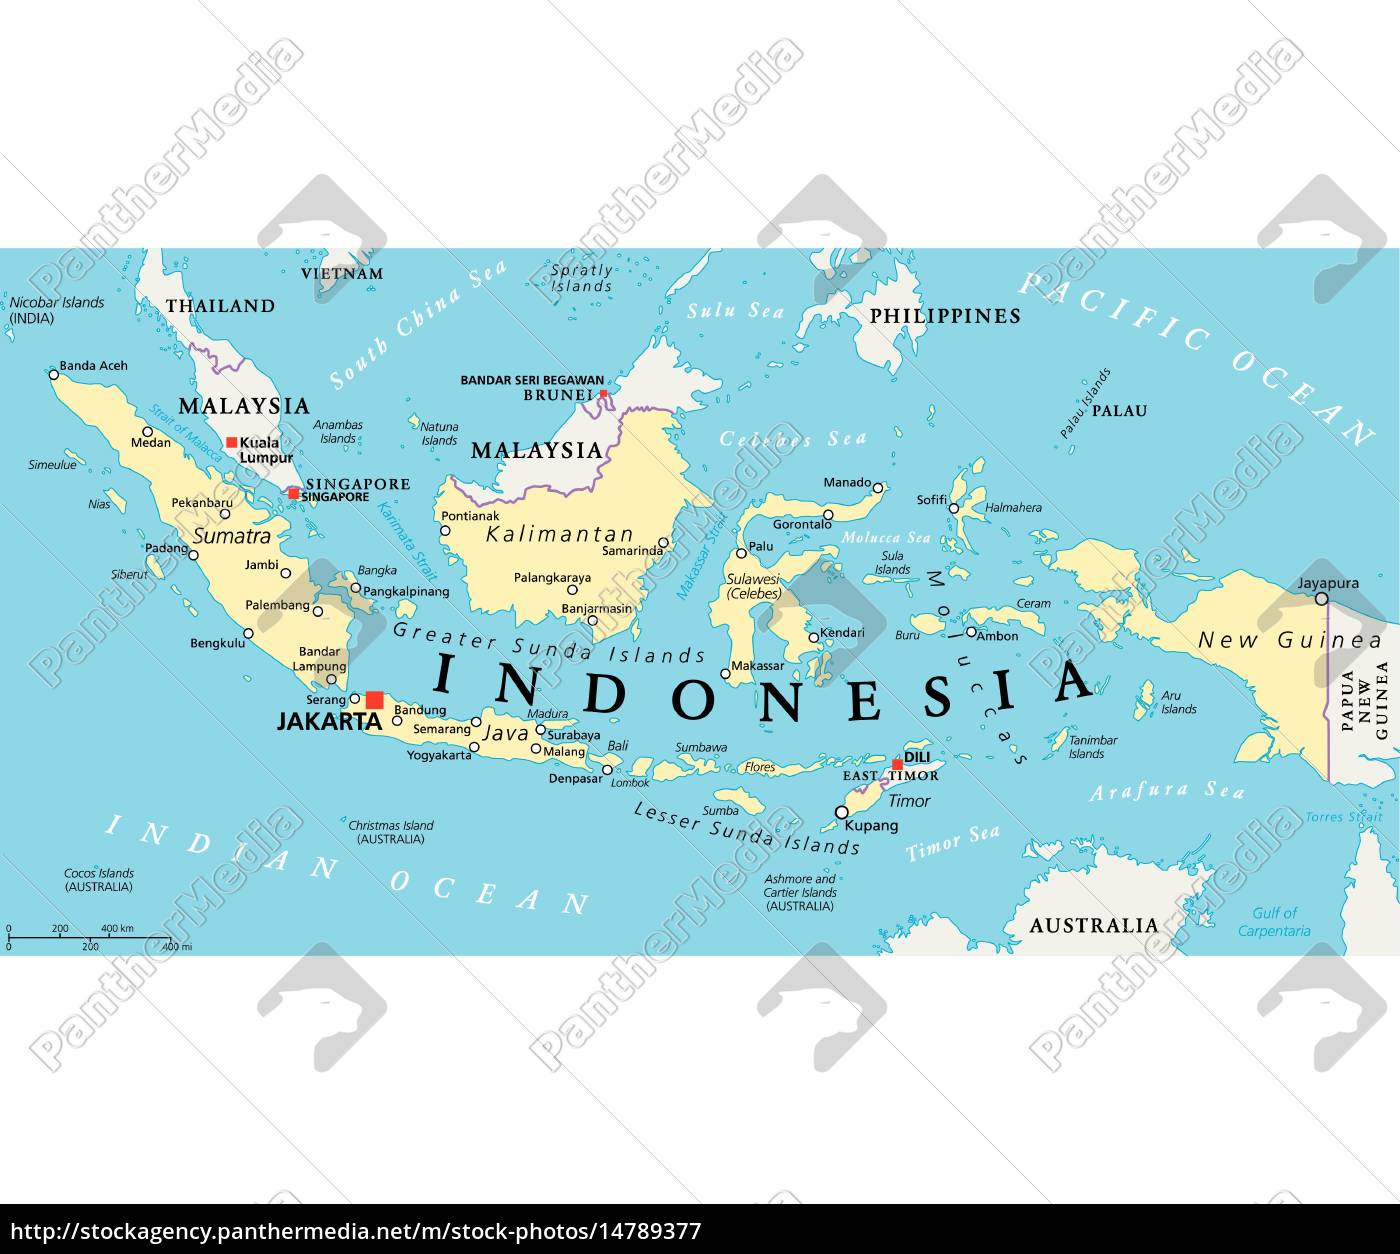  indonesien  politische karte  Lizenzfreies Bild 